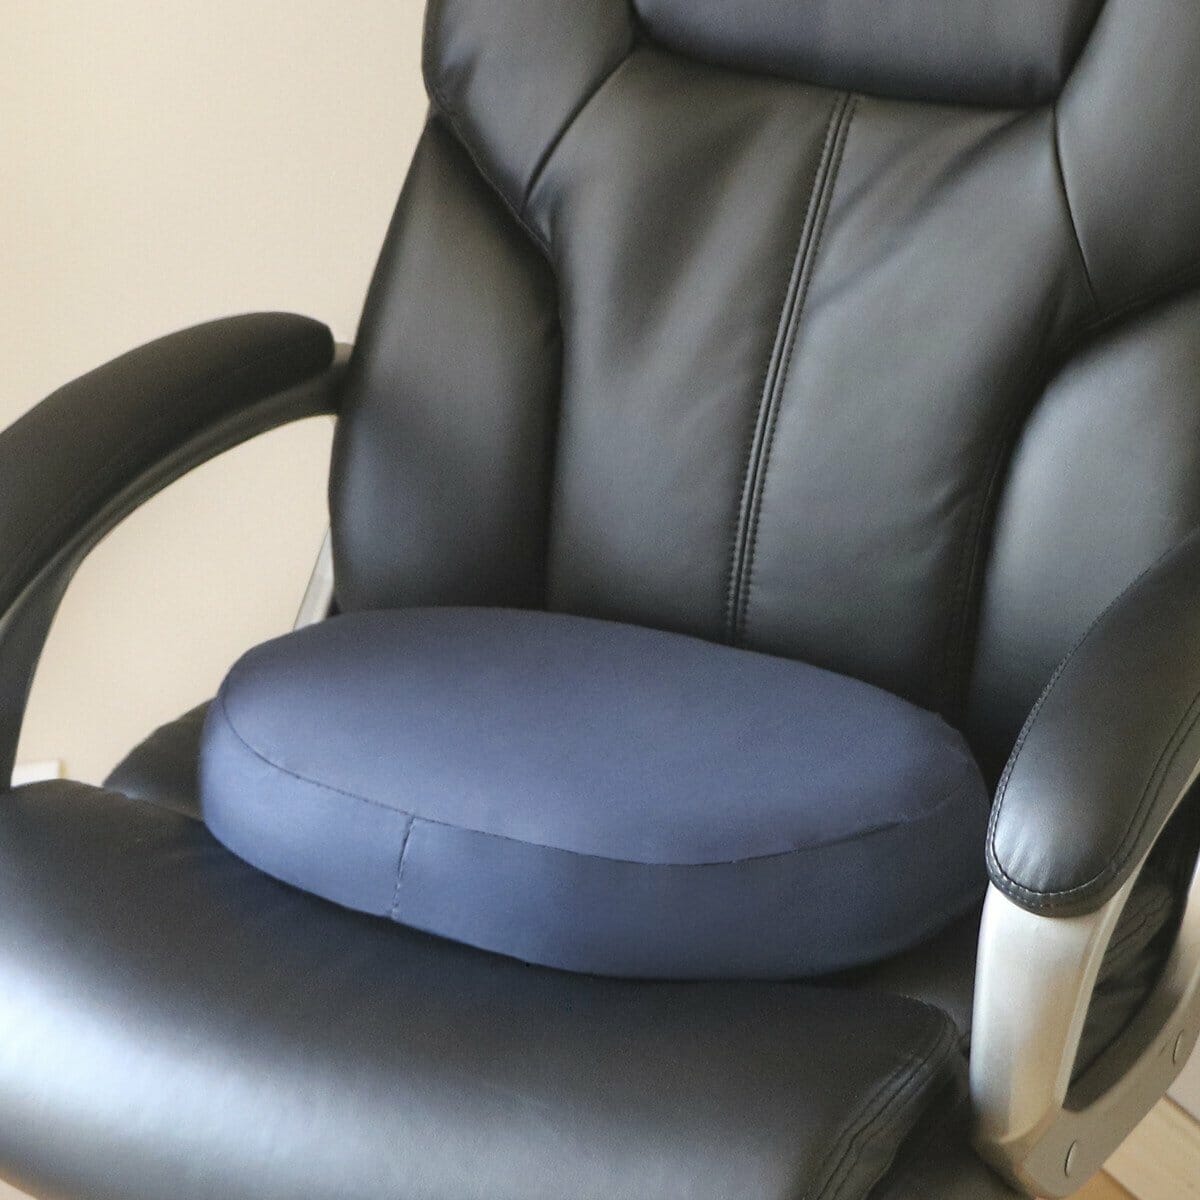 Back Vitalizer (Seat Cushion & Lumbar Support) - Chiro1Source